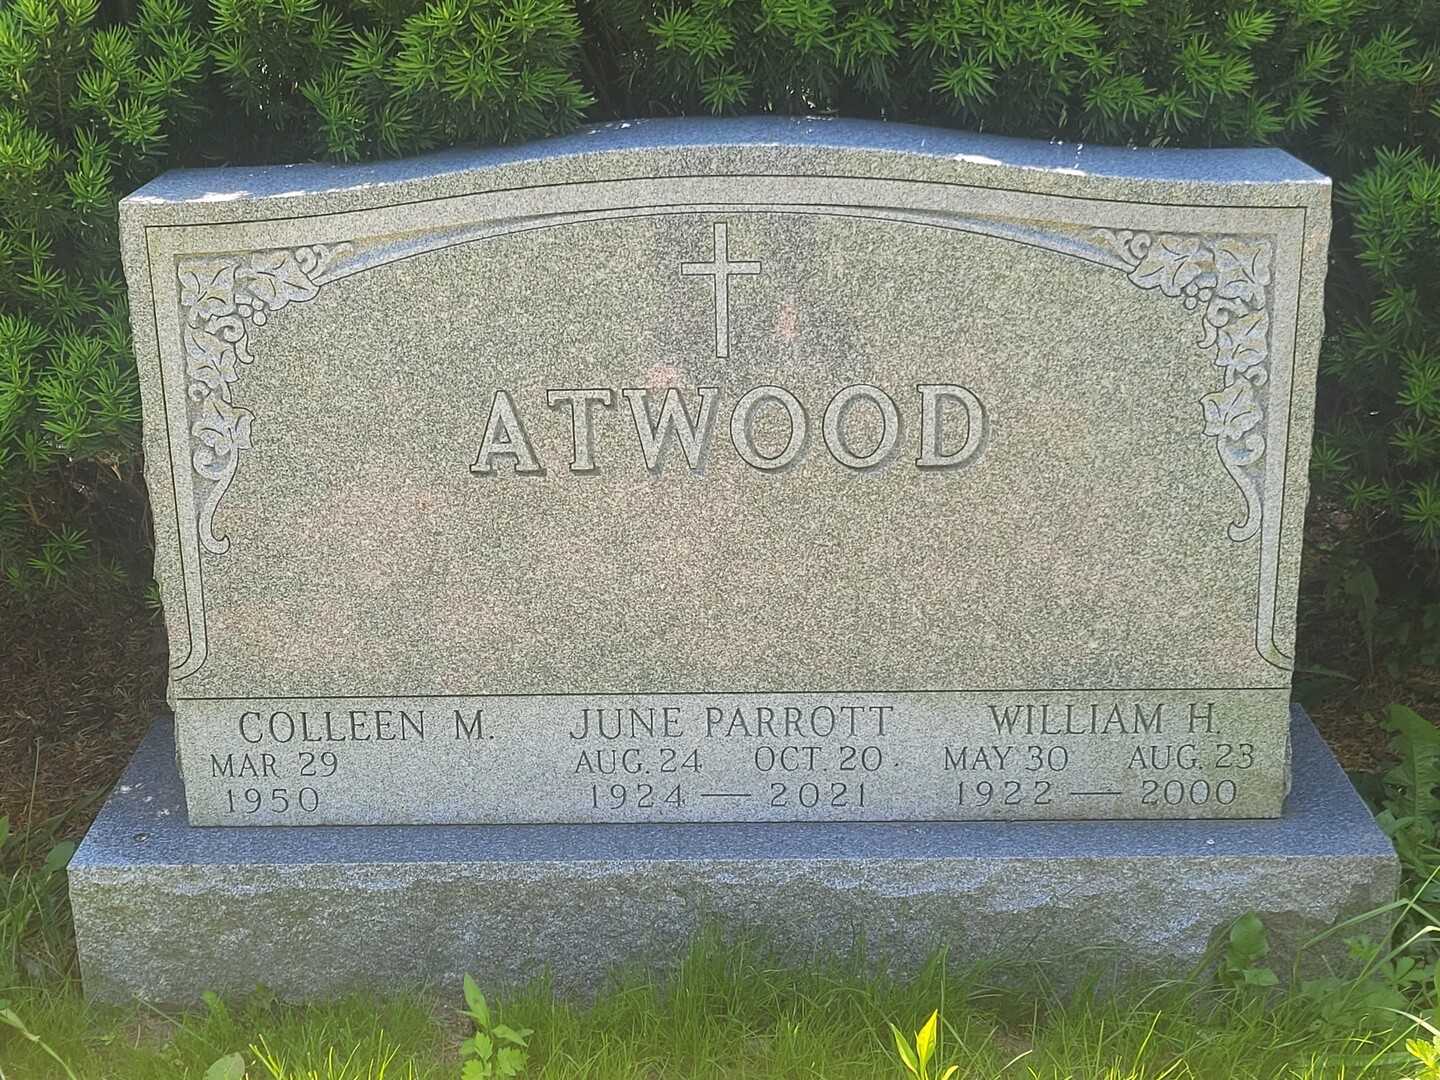 William H. Atwood's grave. Photo 2